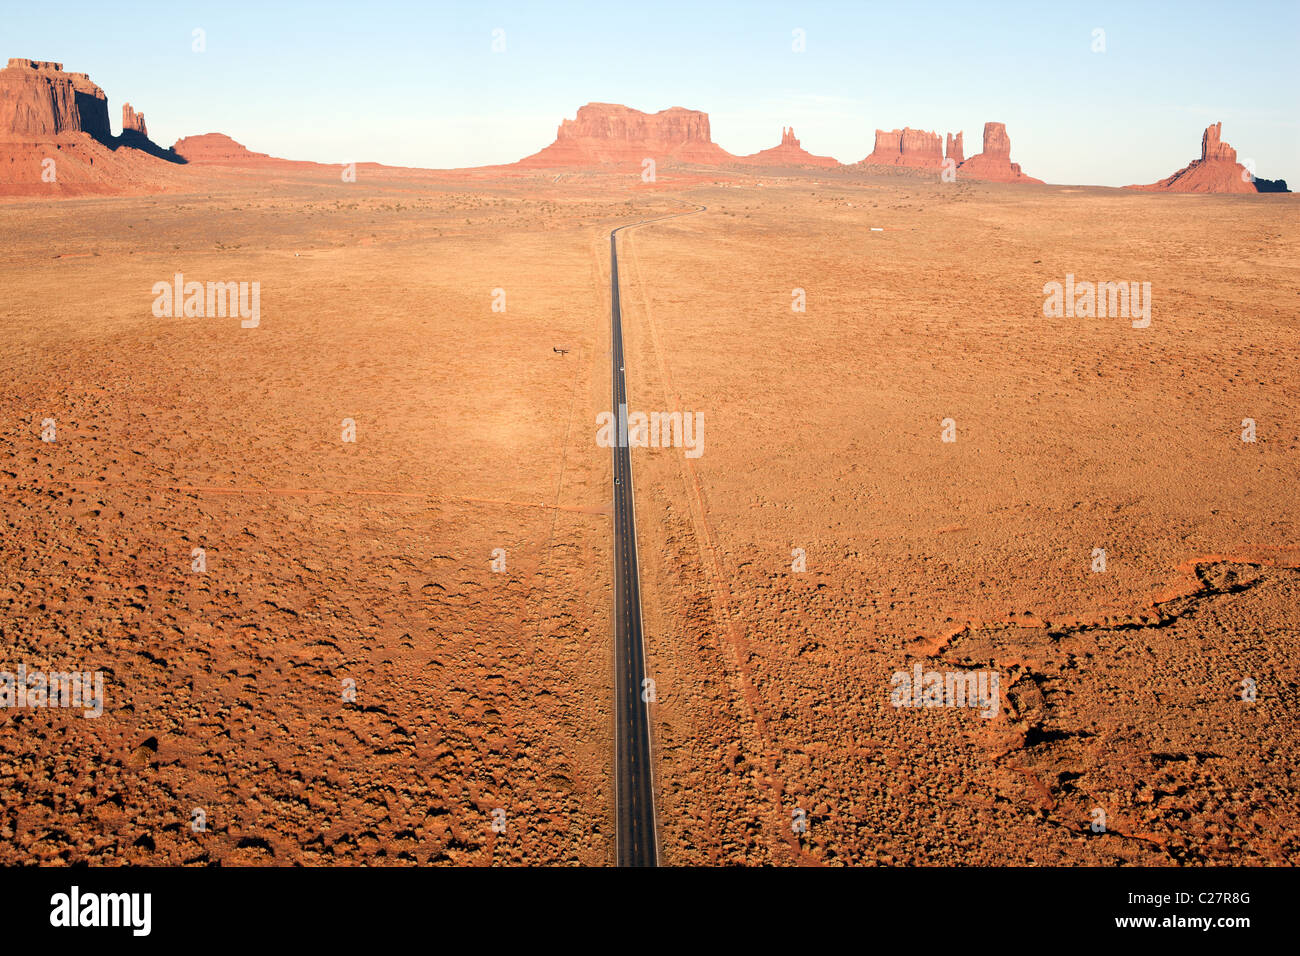 LUFTAUFNAHME. Straße 163 in Richtung Norden in Richtung Mexican hat. Navajo Indian Land, Monument Valley, Arizona / Utah, USA. Stockfoto